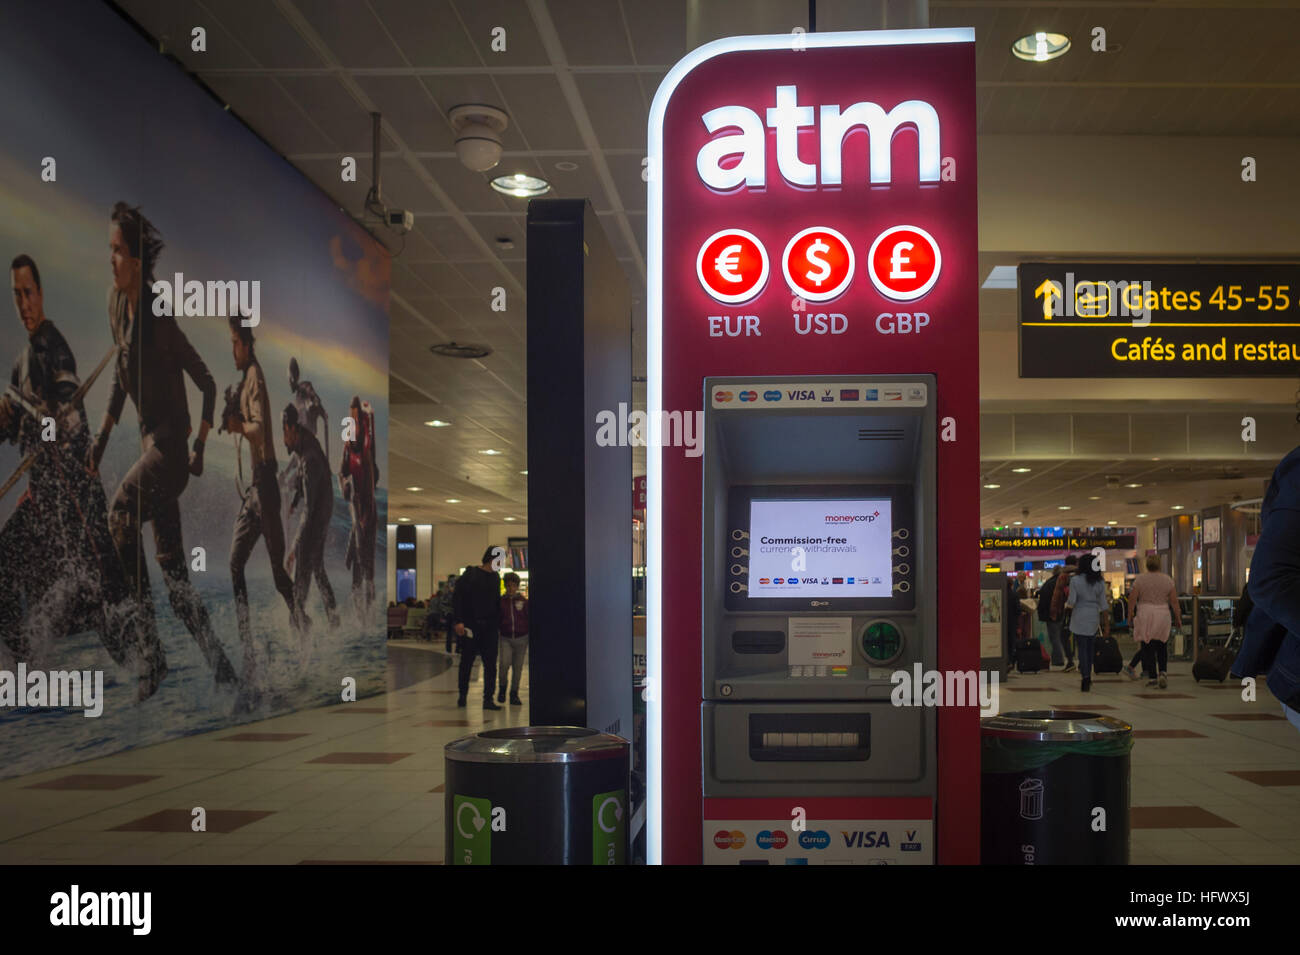 Atm cash machine Stock Photo